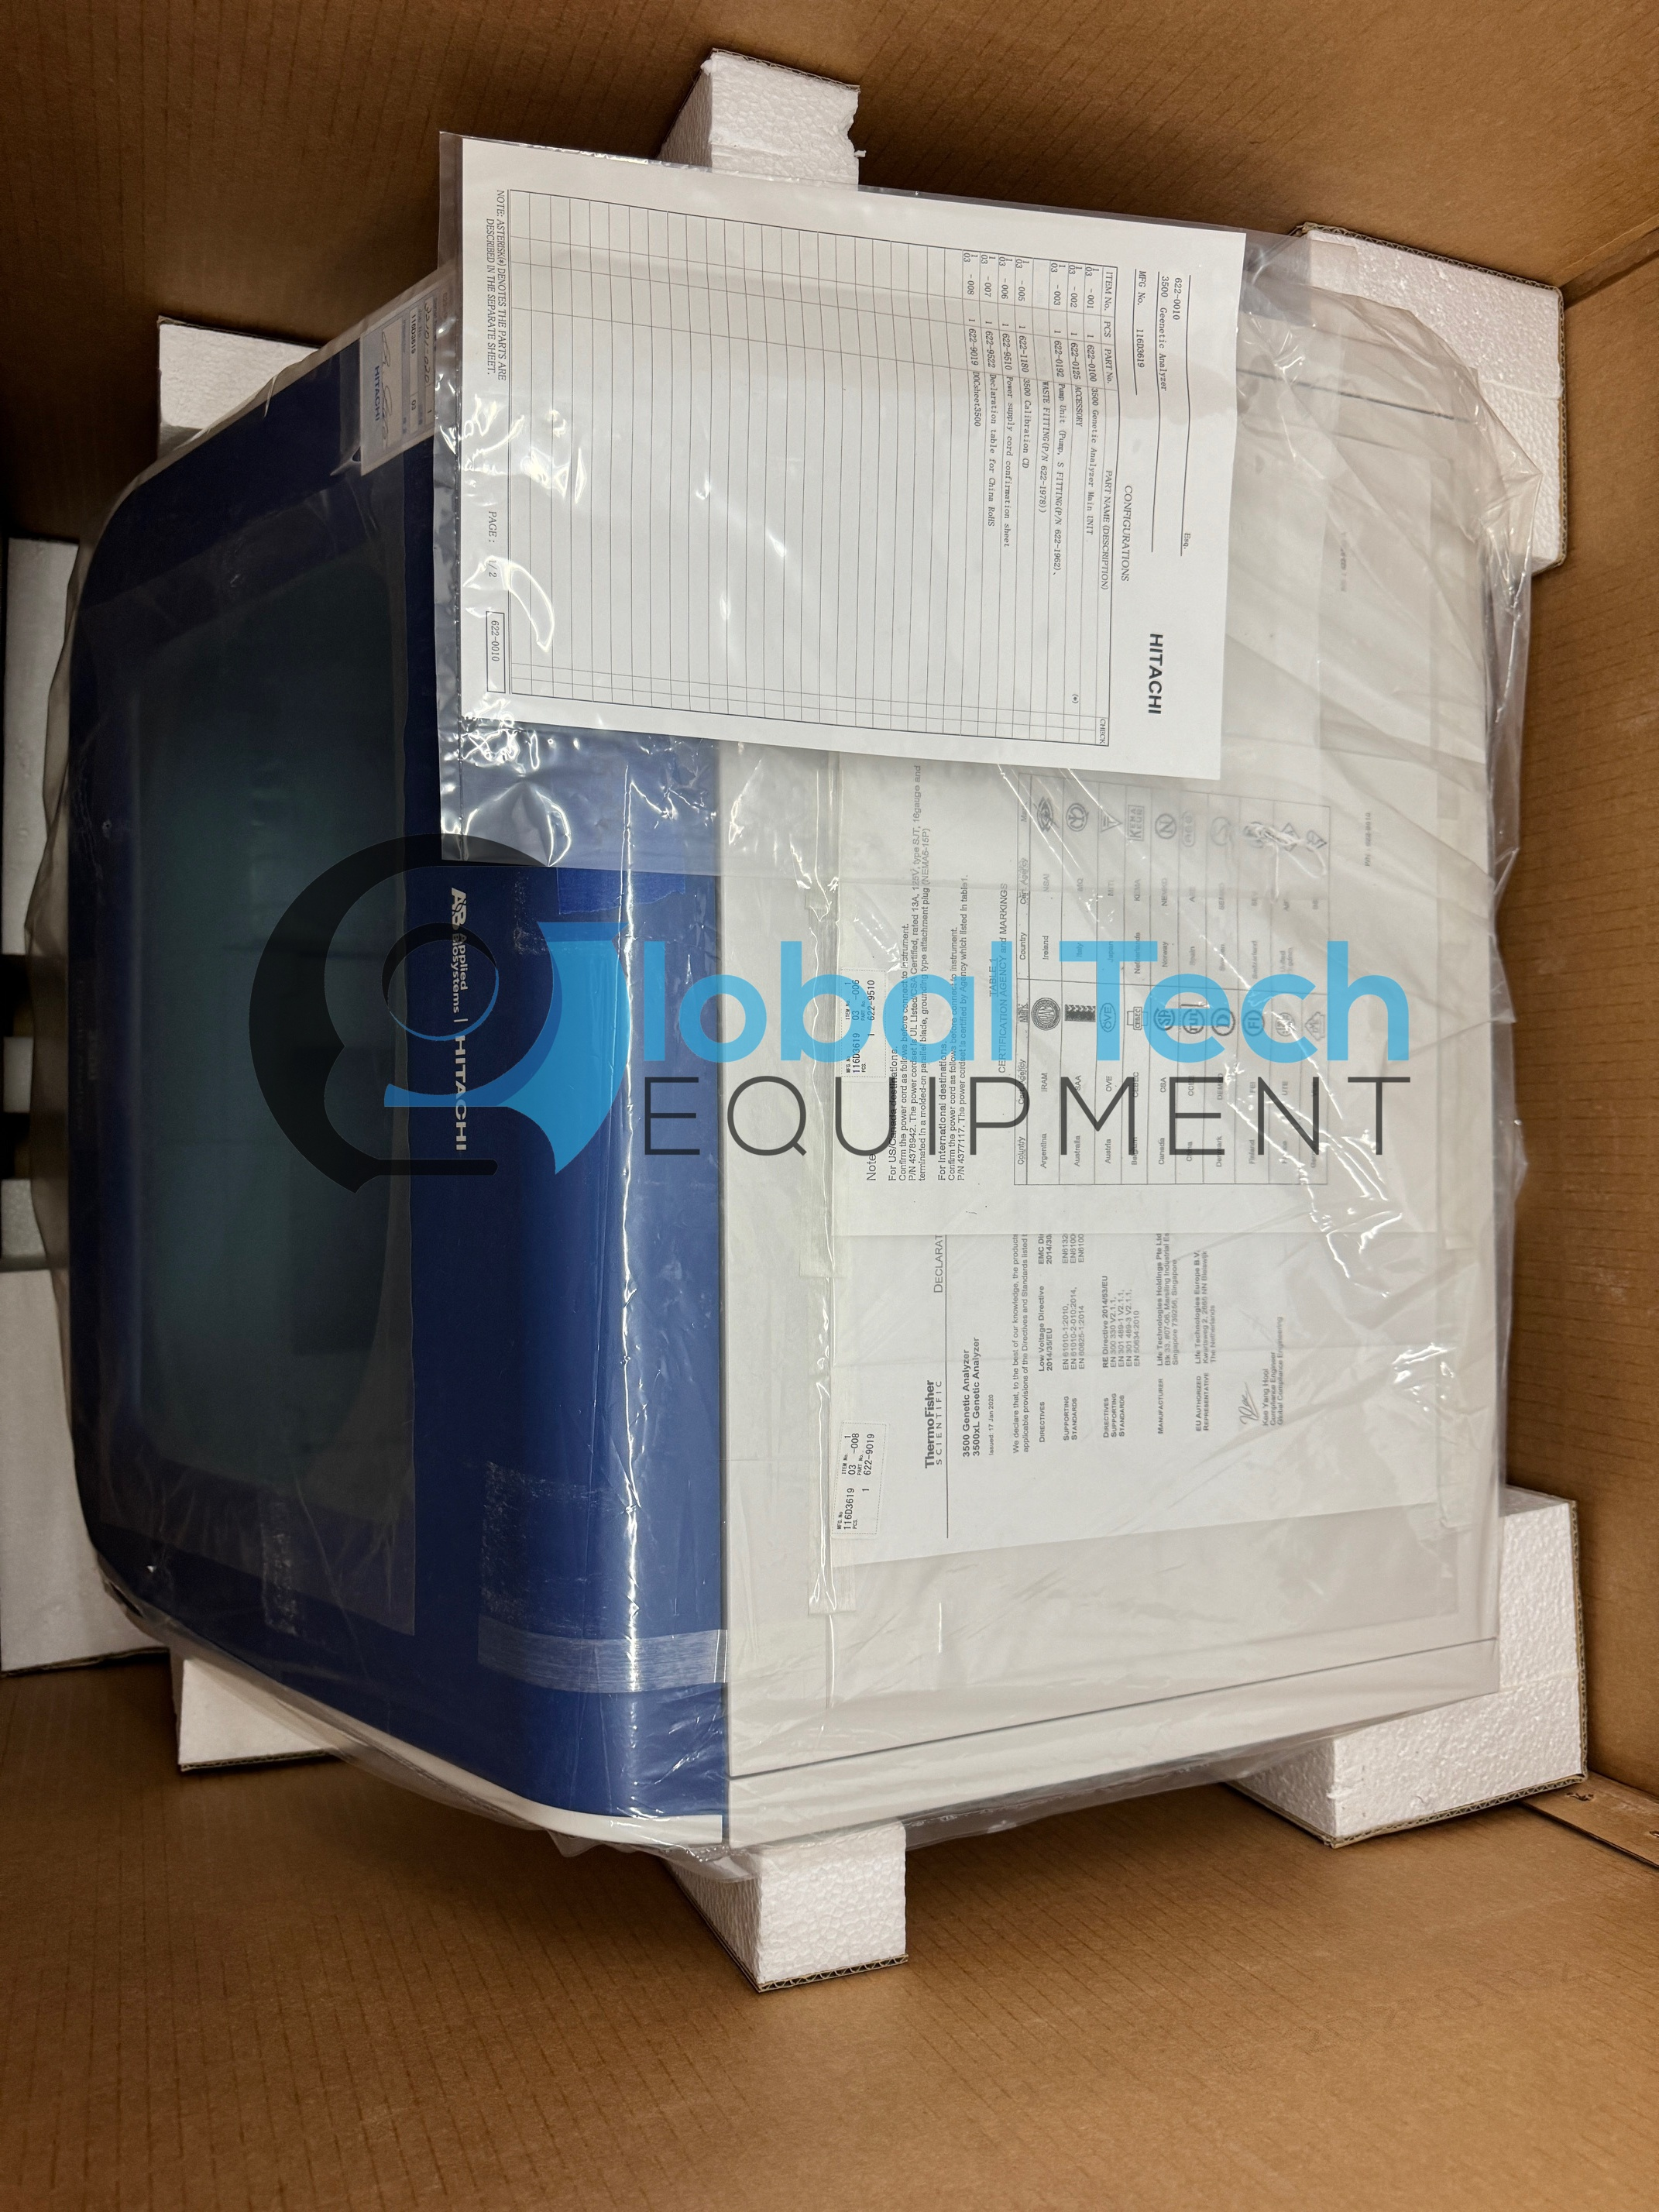 New in Box - 2020 Thermo ABI 3500 Genetic Analyzer with installation Kit